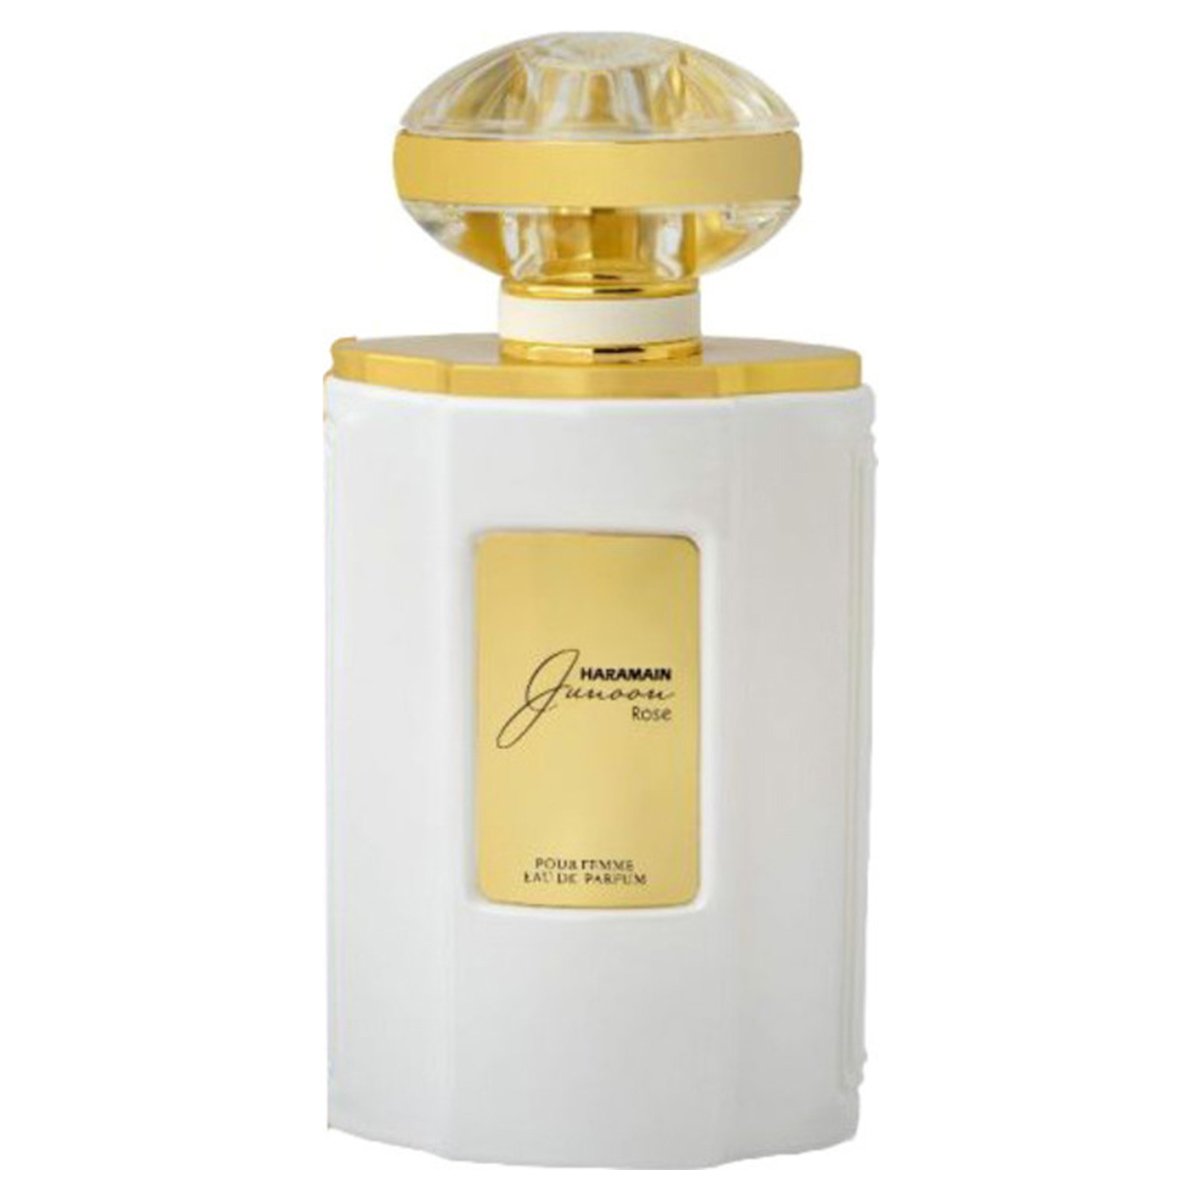 Junoon Rose Eau de Parfum 75ml Al Haramain | Smile Europe Wholesale